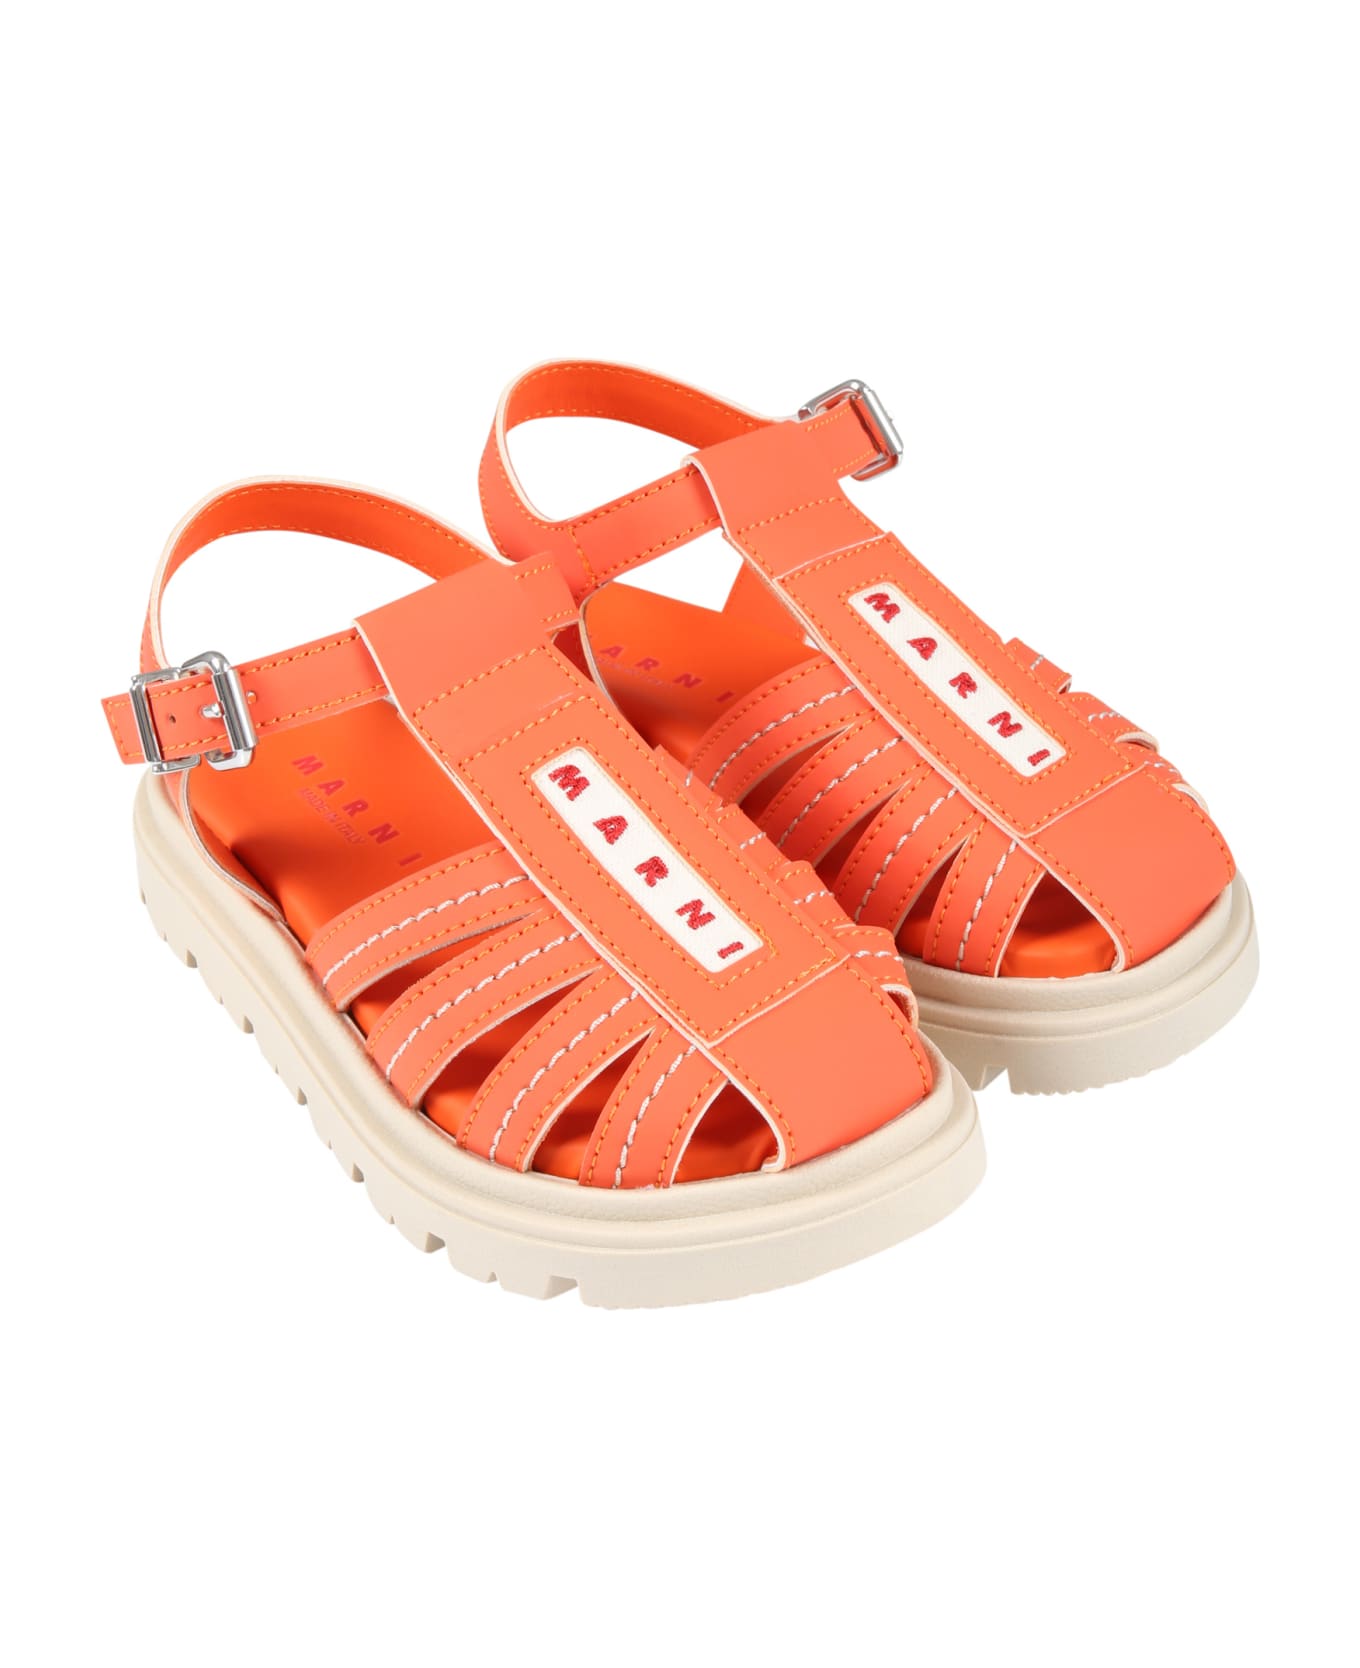 Marni Orange Sandals For Girl With Red Logo - Orange